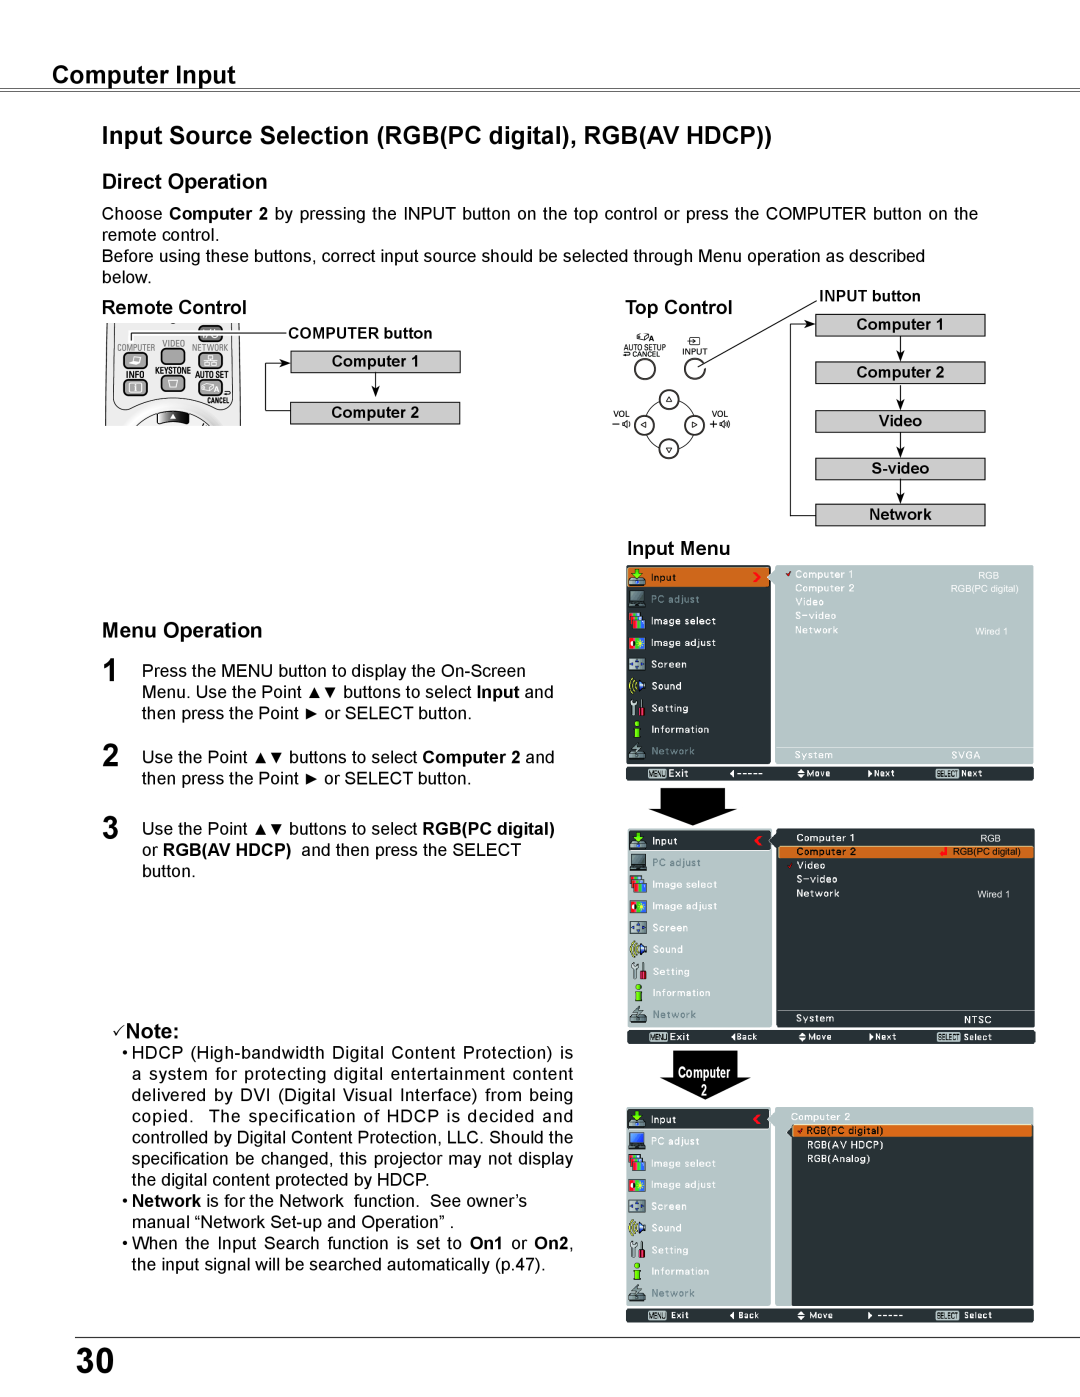 Sanyo PLC-XU355A Computer Input, Input Source Selection RGBPC digital, RGBAV HDCP, Input Menu, Direct Operation, Note 